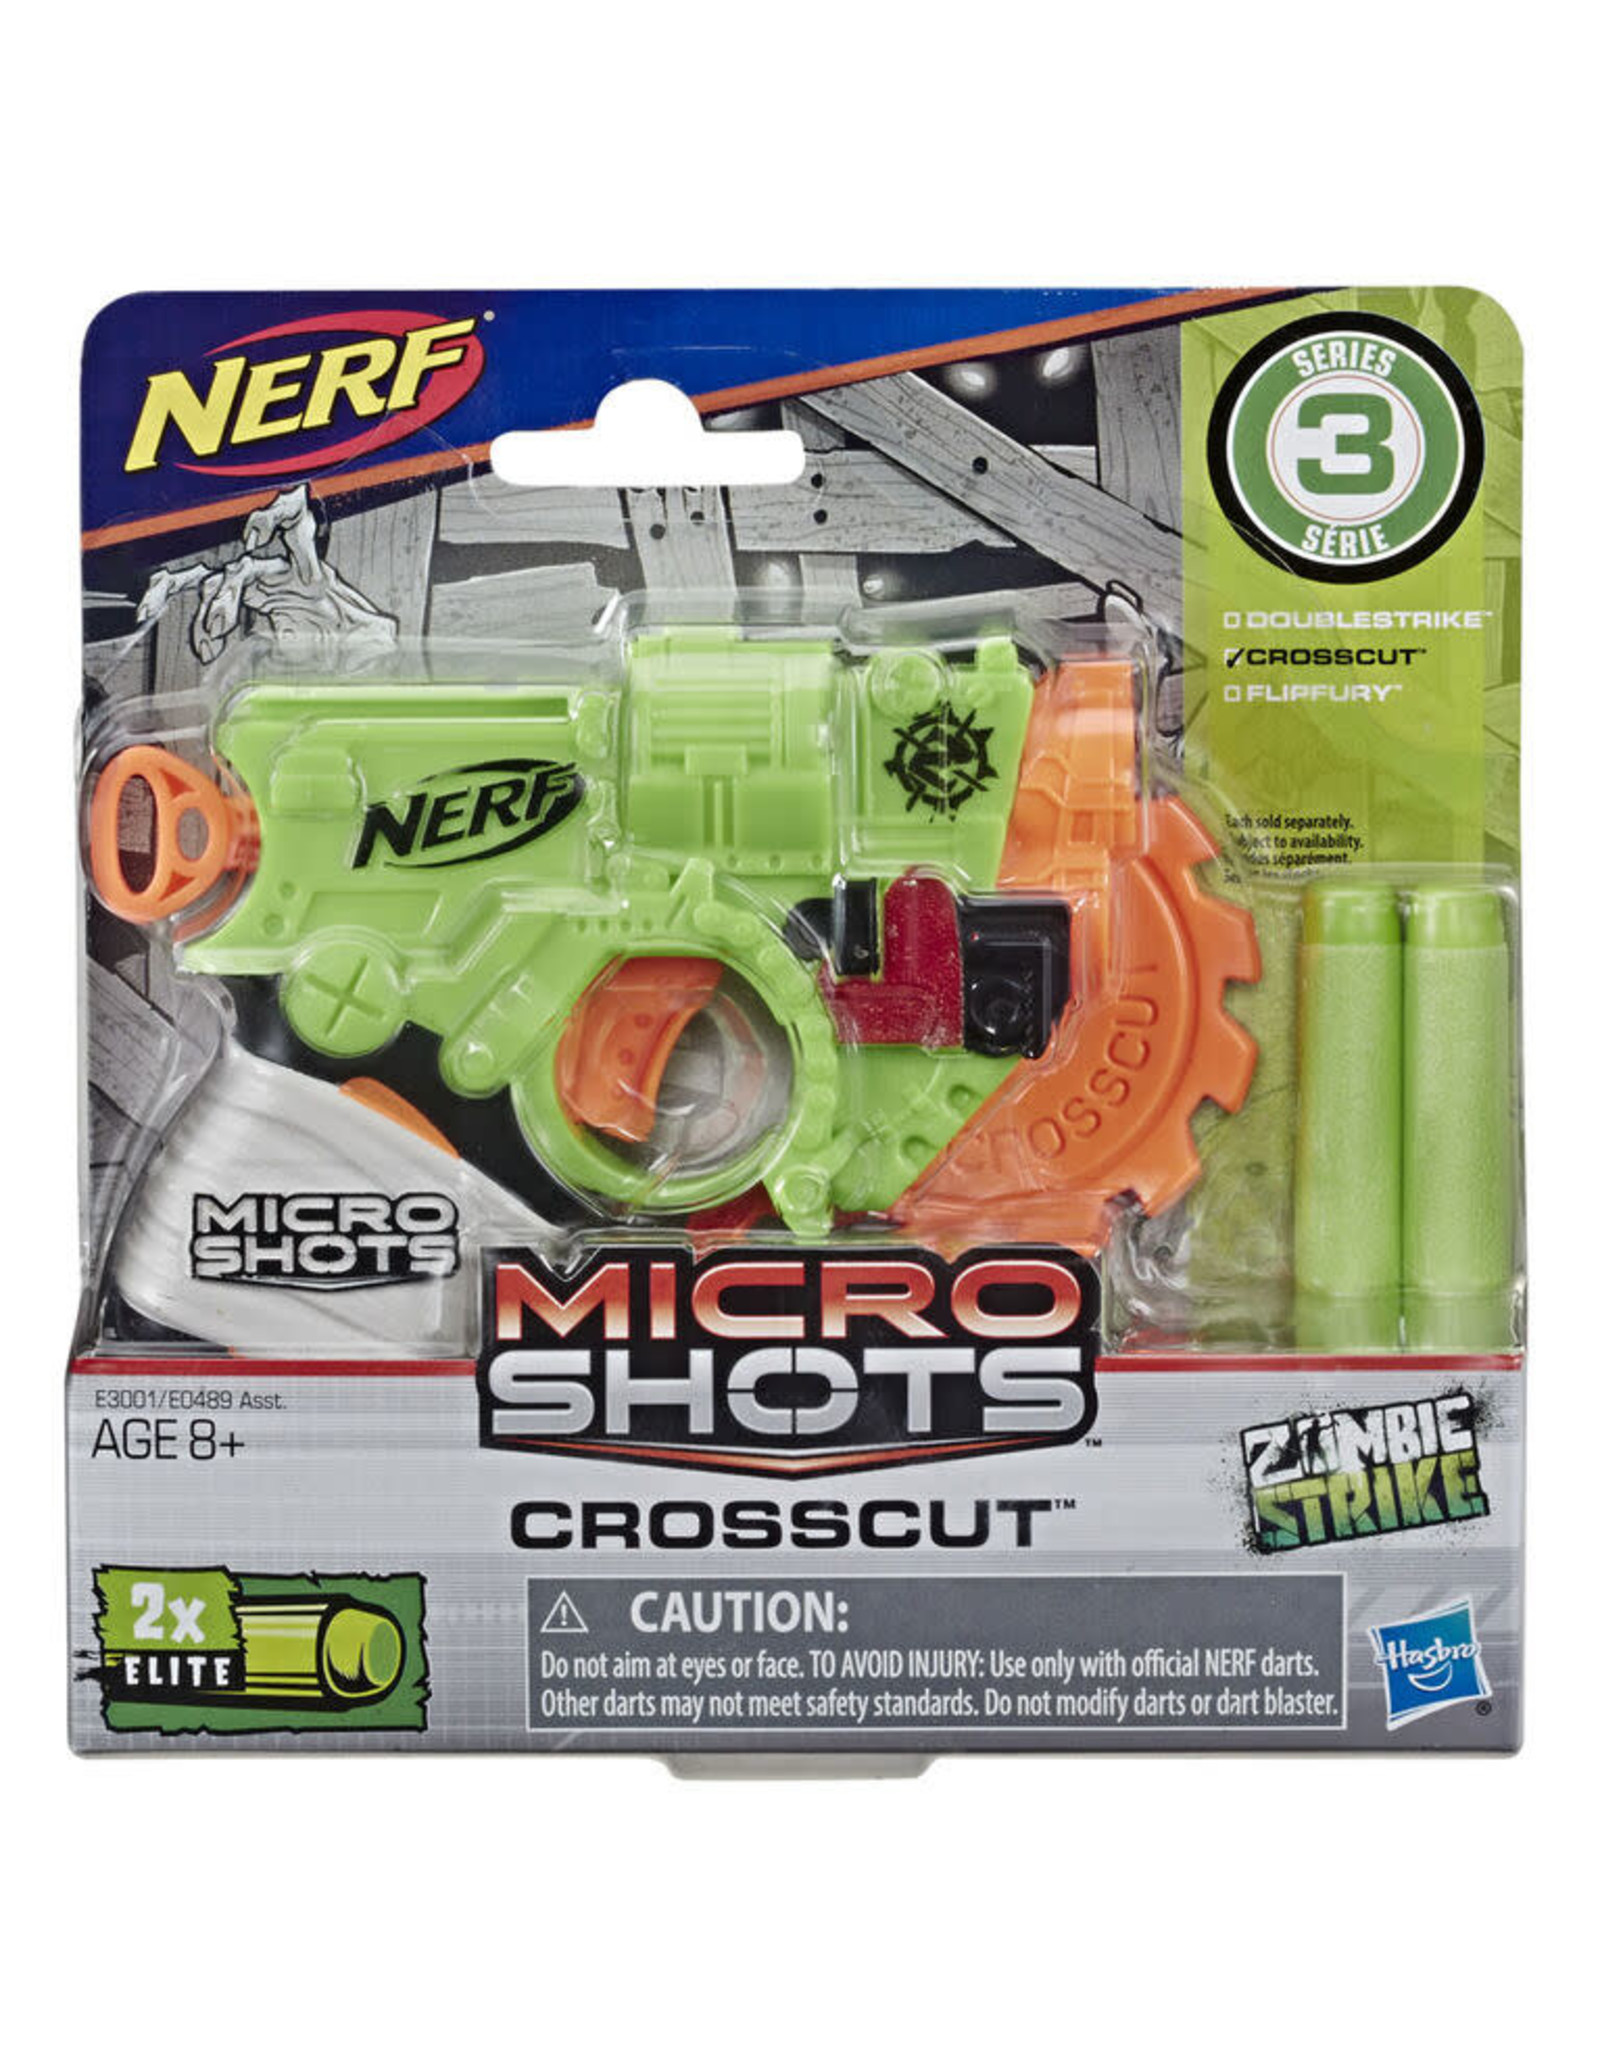 Hasbro Micro shots Crosscut Nerf